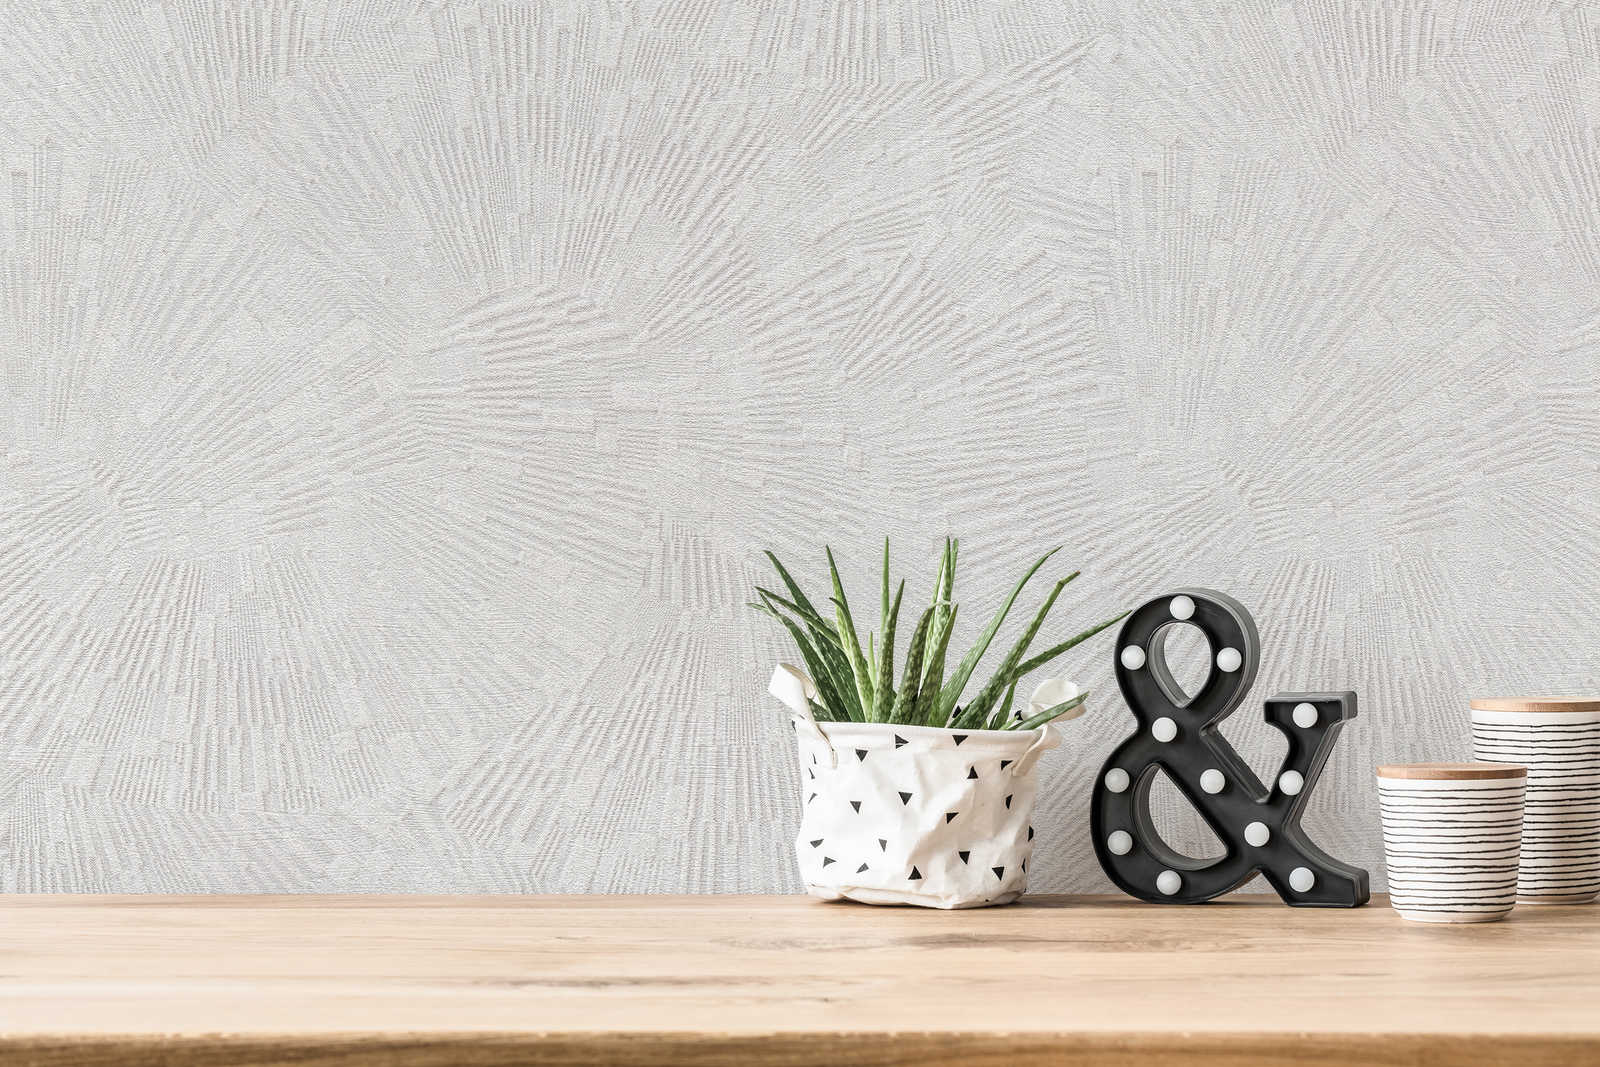             Non-woven wallpaper with graphic pattern in retro style - beige, cream
        